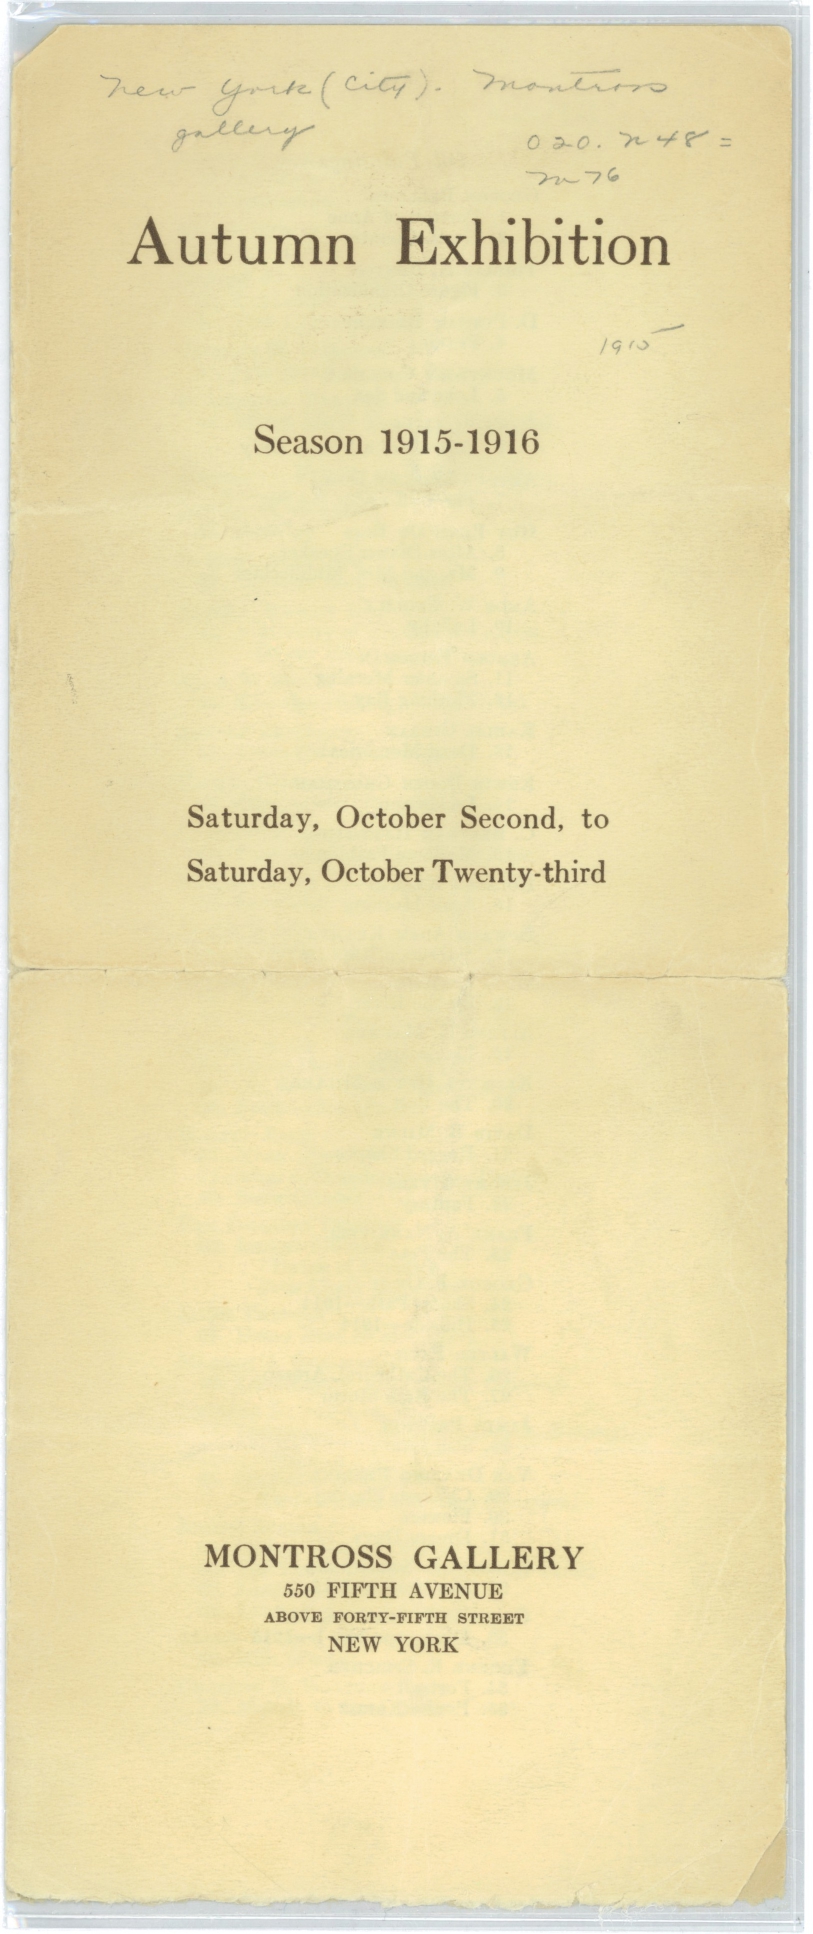 Autumn Exhibition Catalogue, Season 1915-1916, New York: Montross Gallery, October 2-23, 1915.